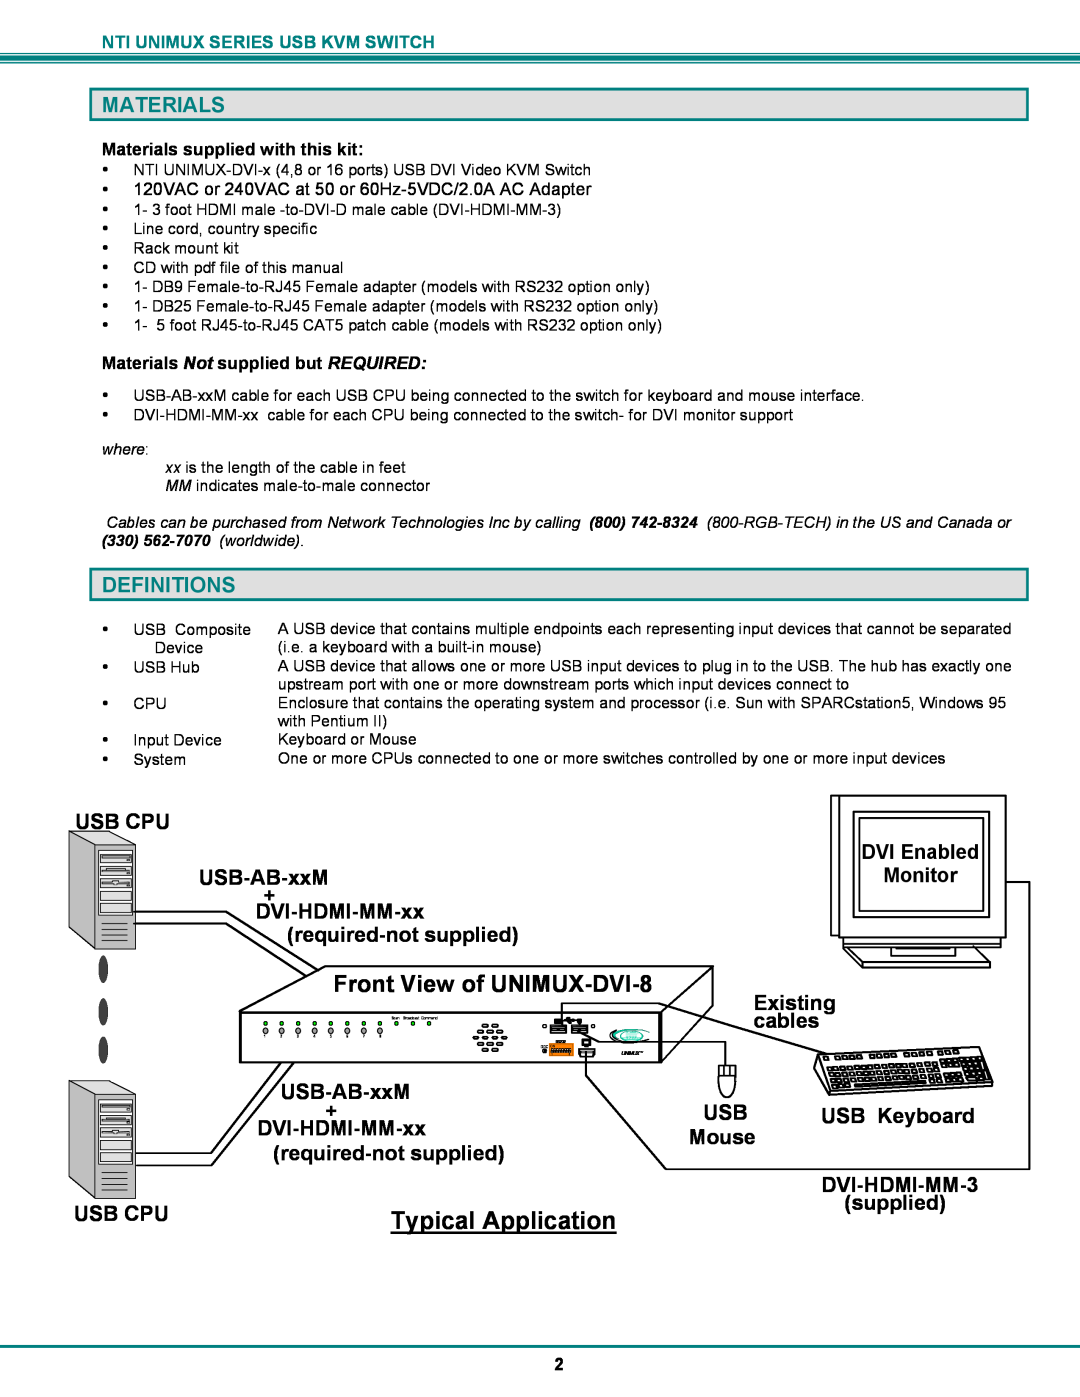 Network Technologies UNIMUX-DVI-x, USB DVI KVM Typical Application, Front View of UNIMUX-DVI-8, Materials, Definitions 